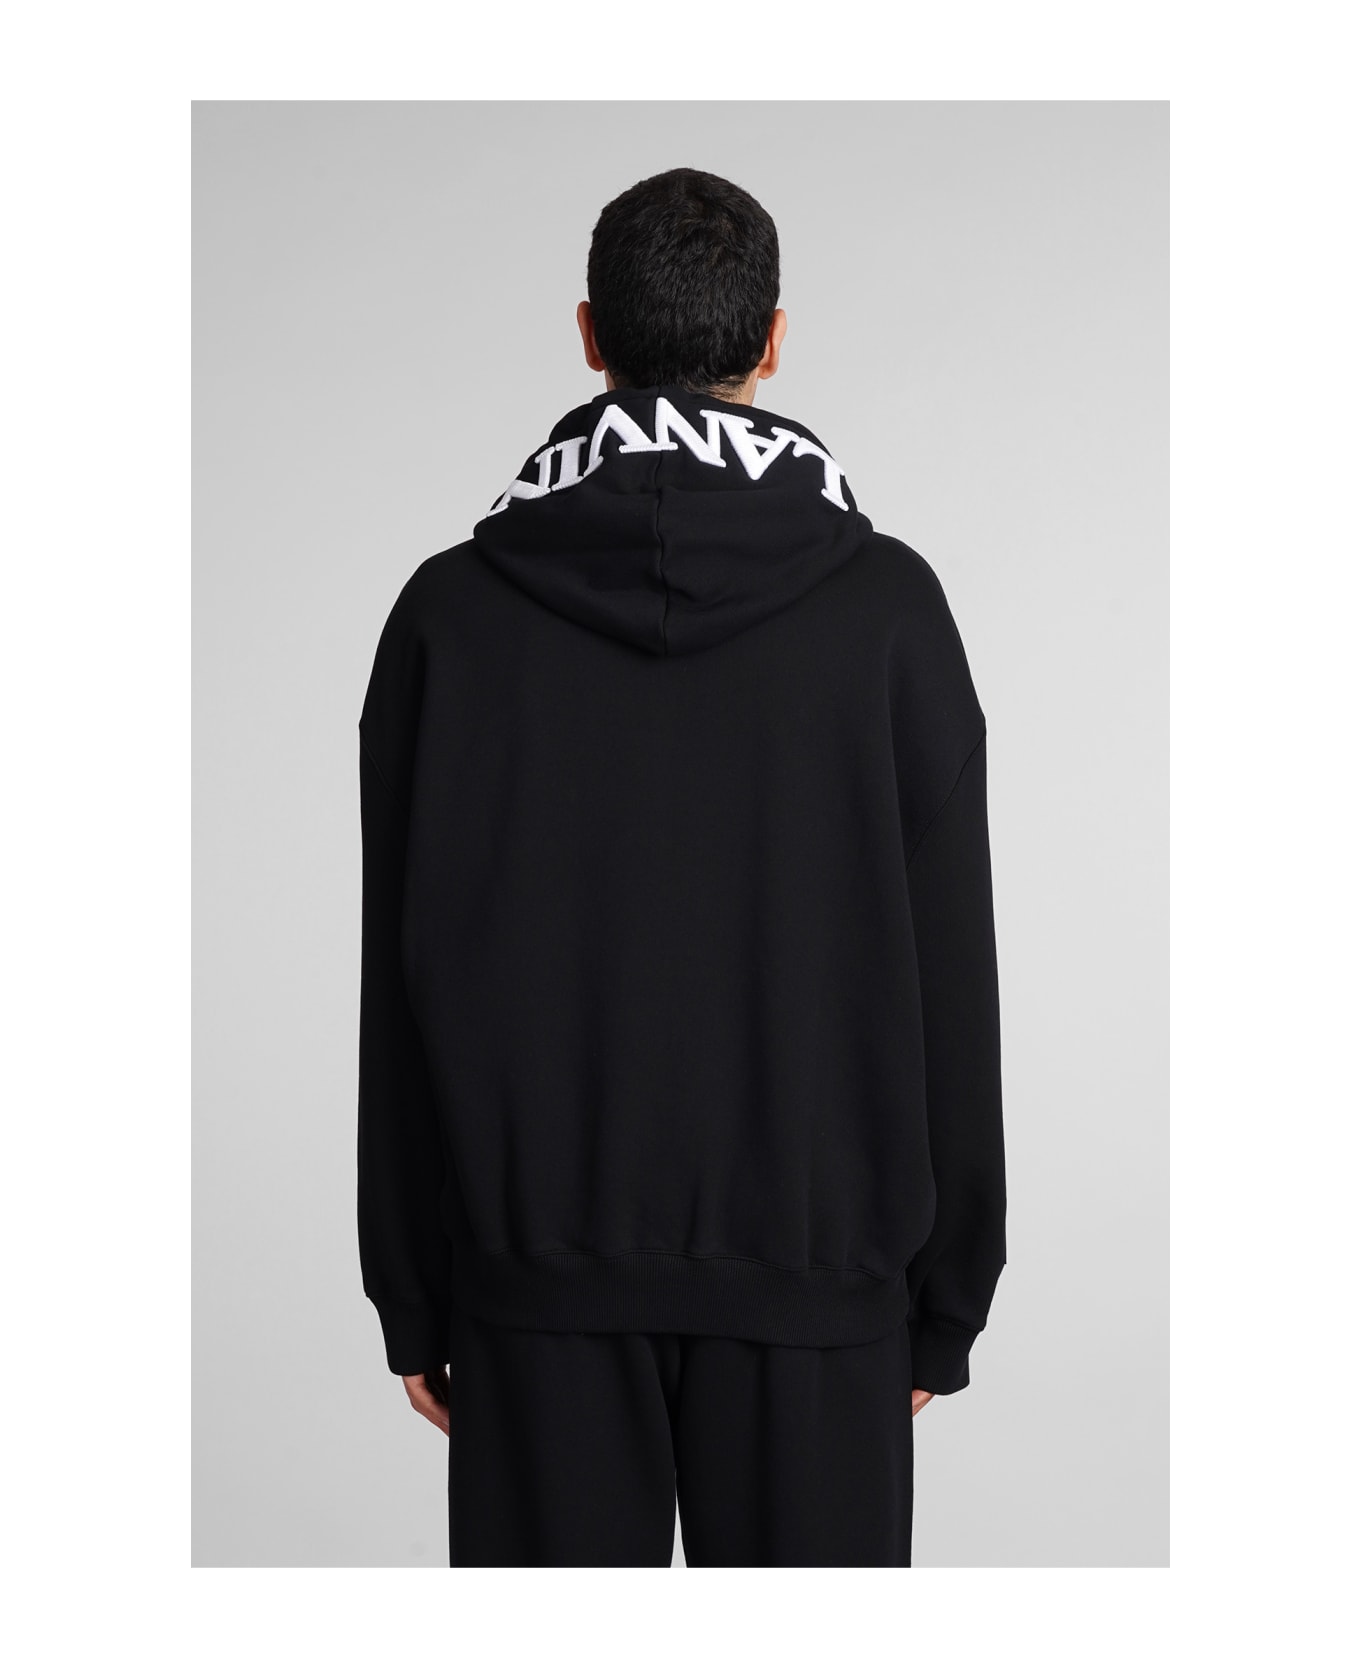 Lanvin Sweatshirt In Black Cotton - black